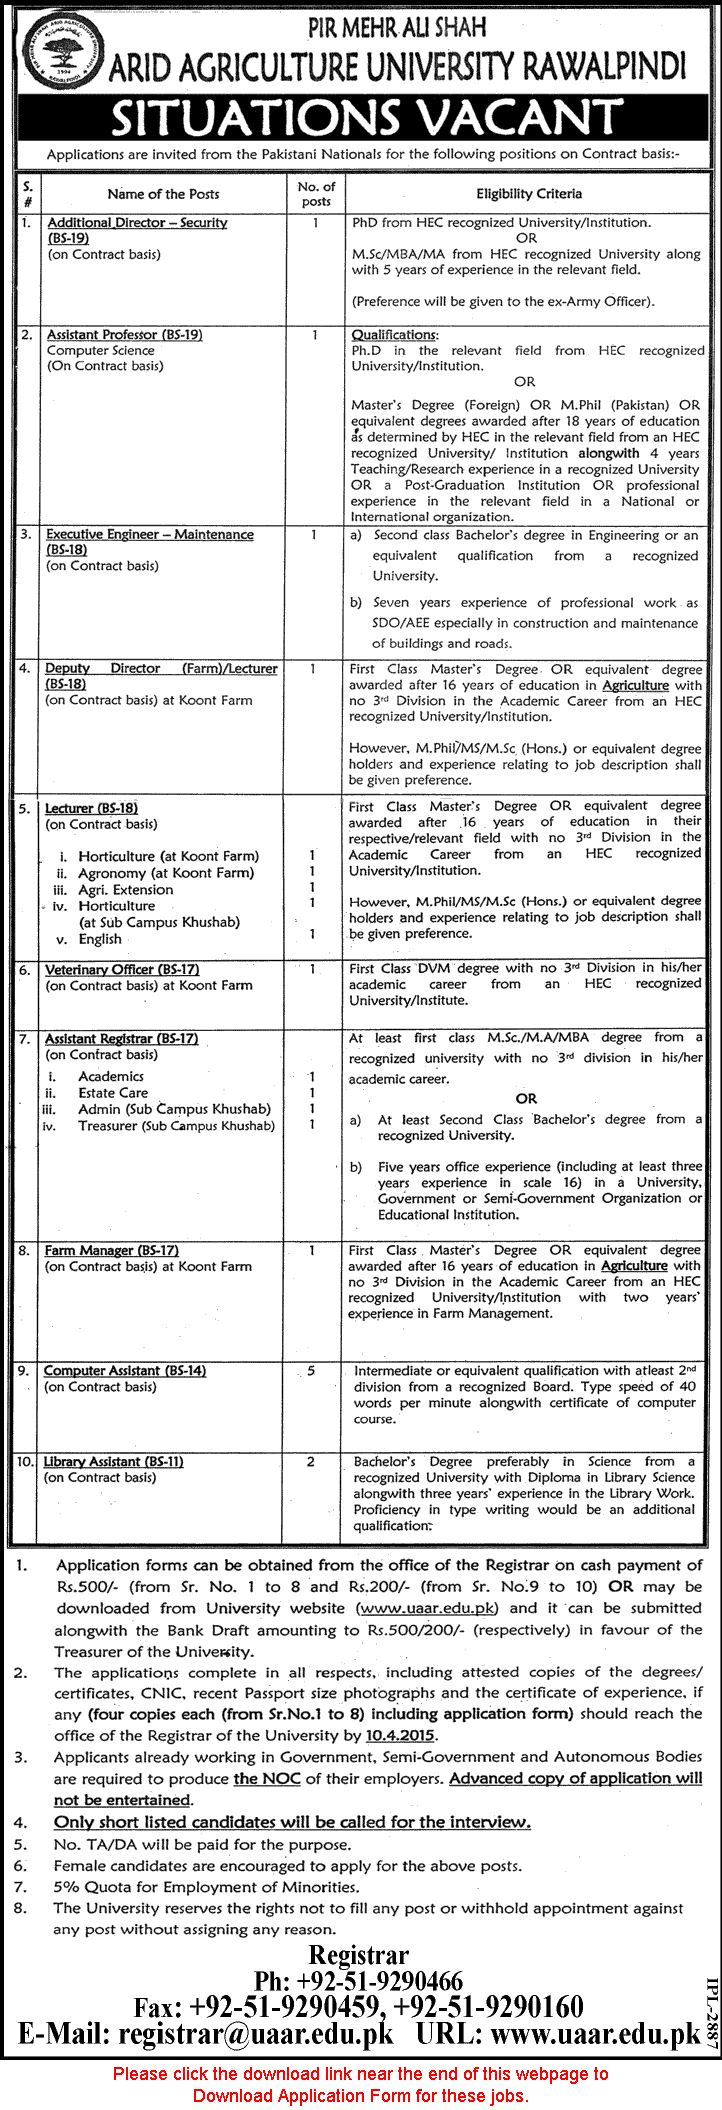 ARID Agriculture University Rawalpindi Jobs 2015 March Application Form Faculty & Admin Staff